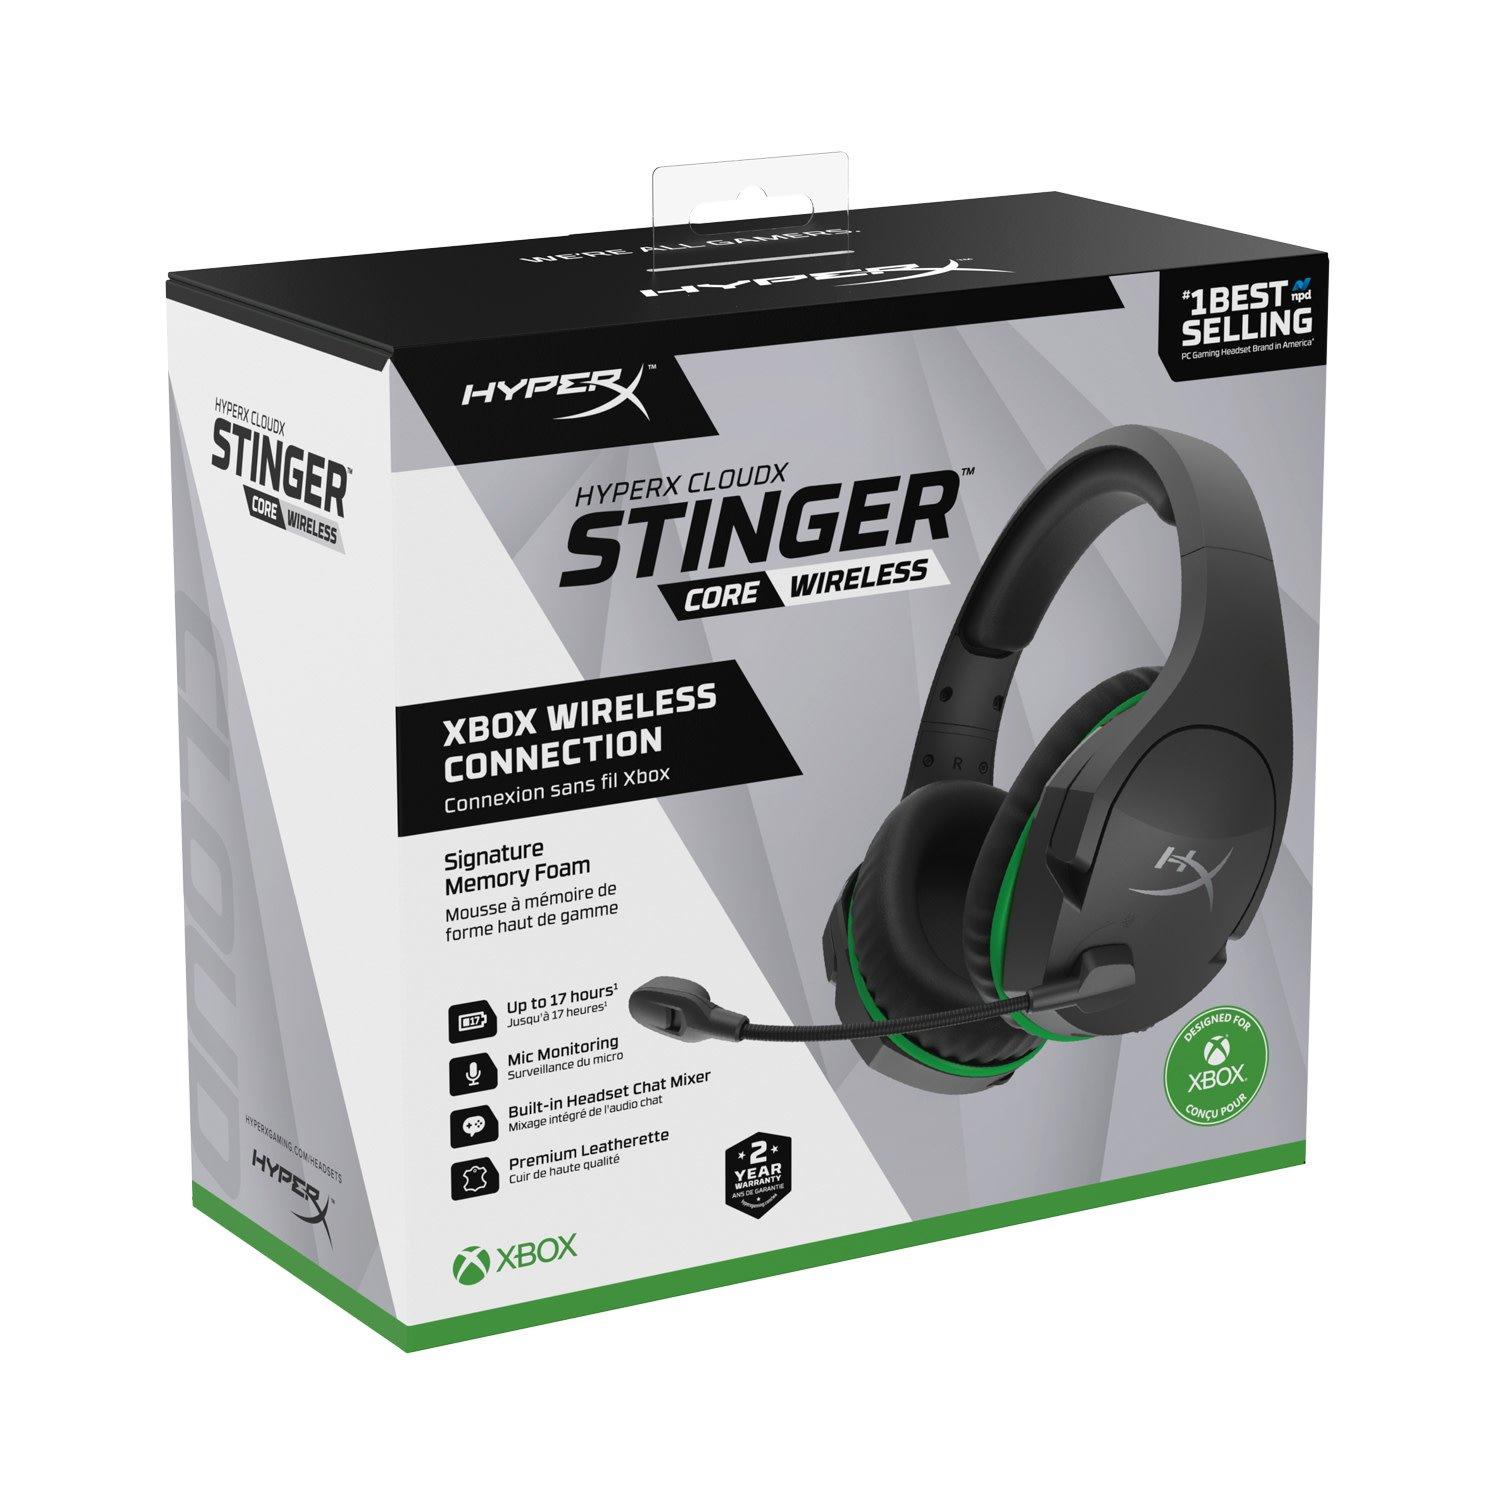  HyperX CloudX Stinger Core – Wireless Gaming Headset